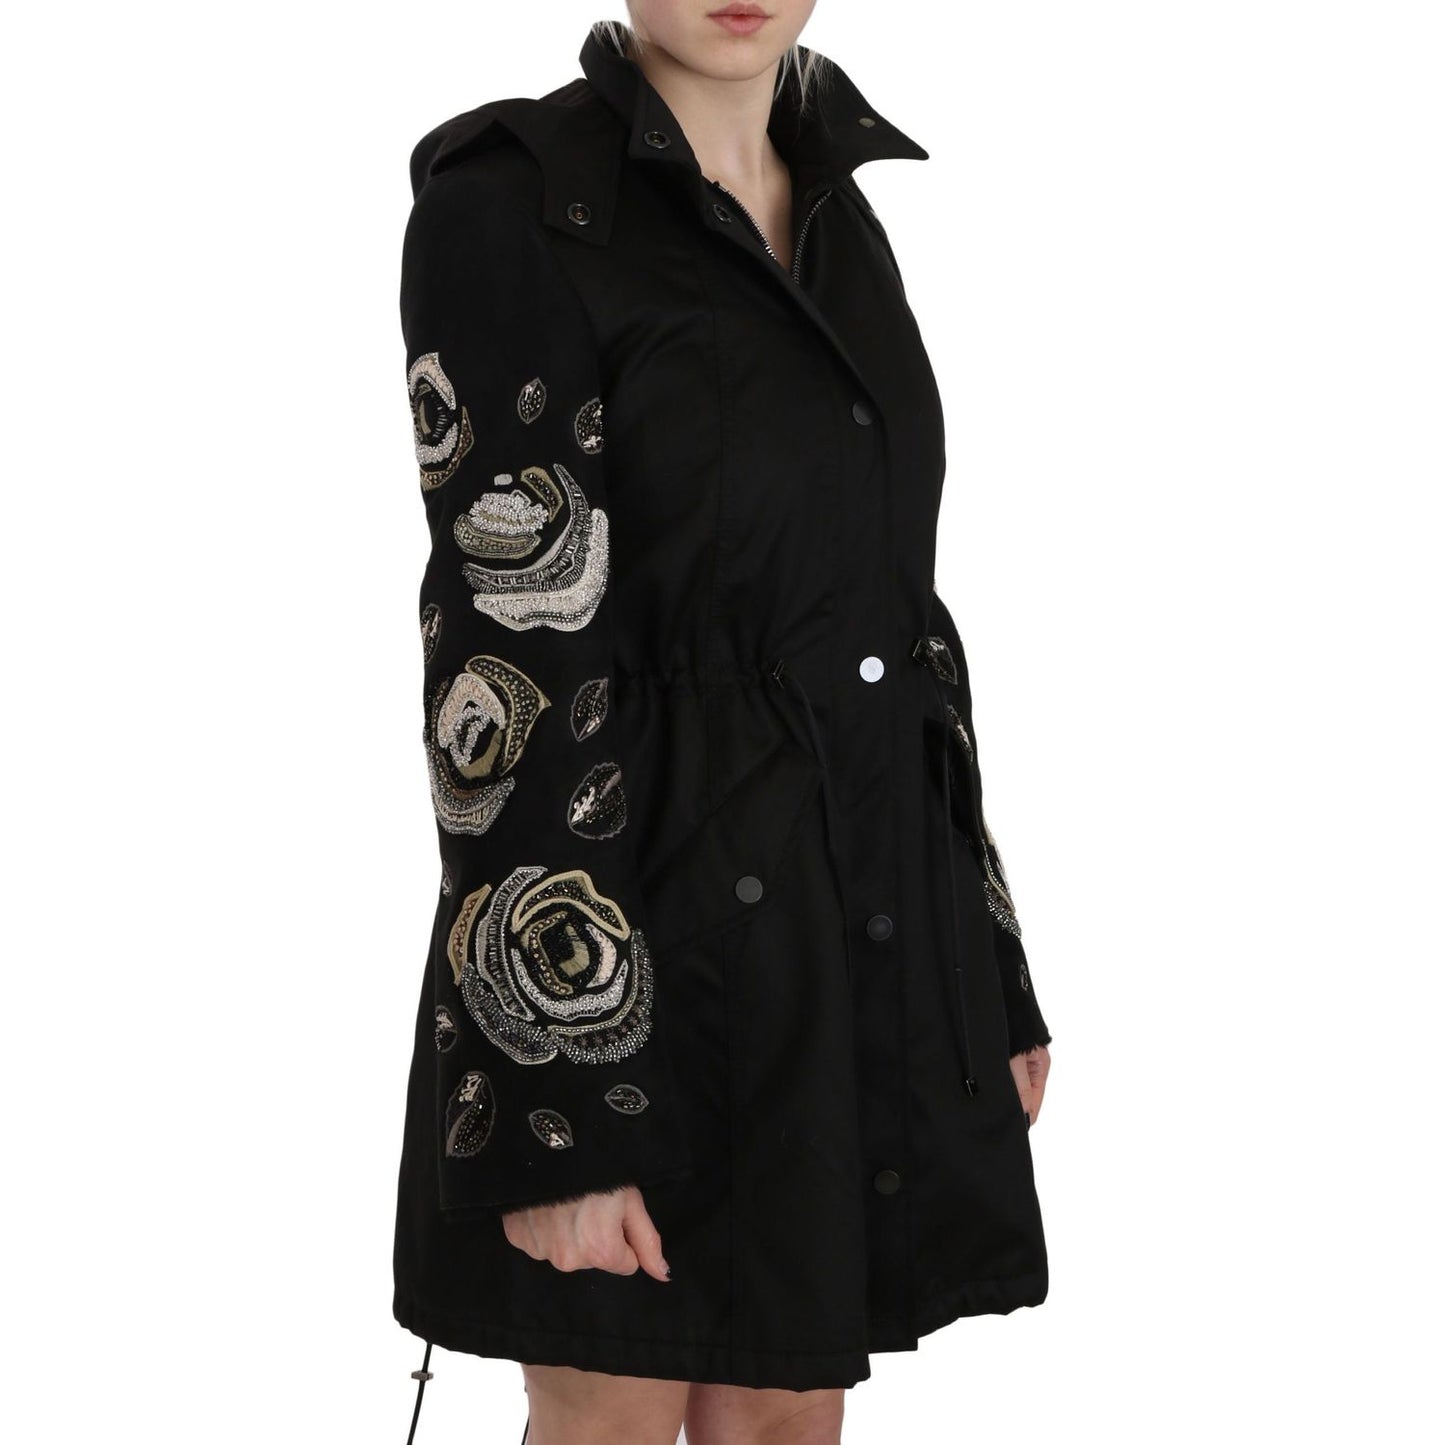 John Richmond Elegant Black Beaded Parka Jacket for Women floral-sequined-beaded-hooded-jacket-coat Coats & Jackets IMG_1403-scaled-e5cdb7c2-541.jpg